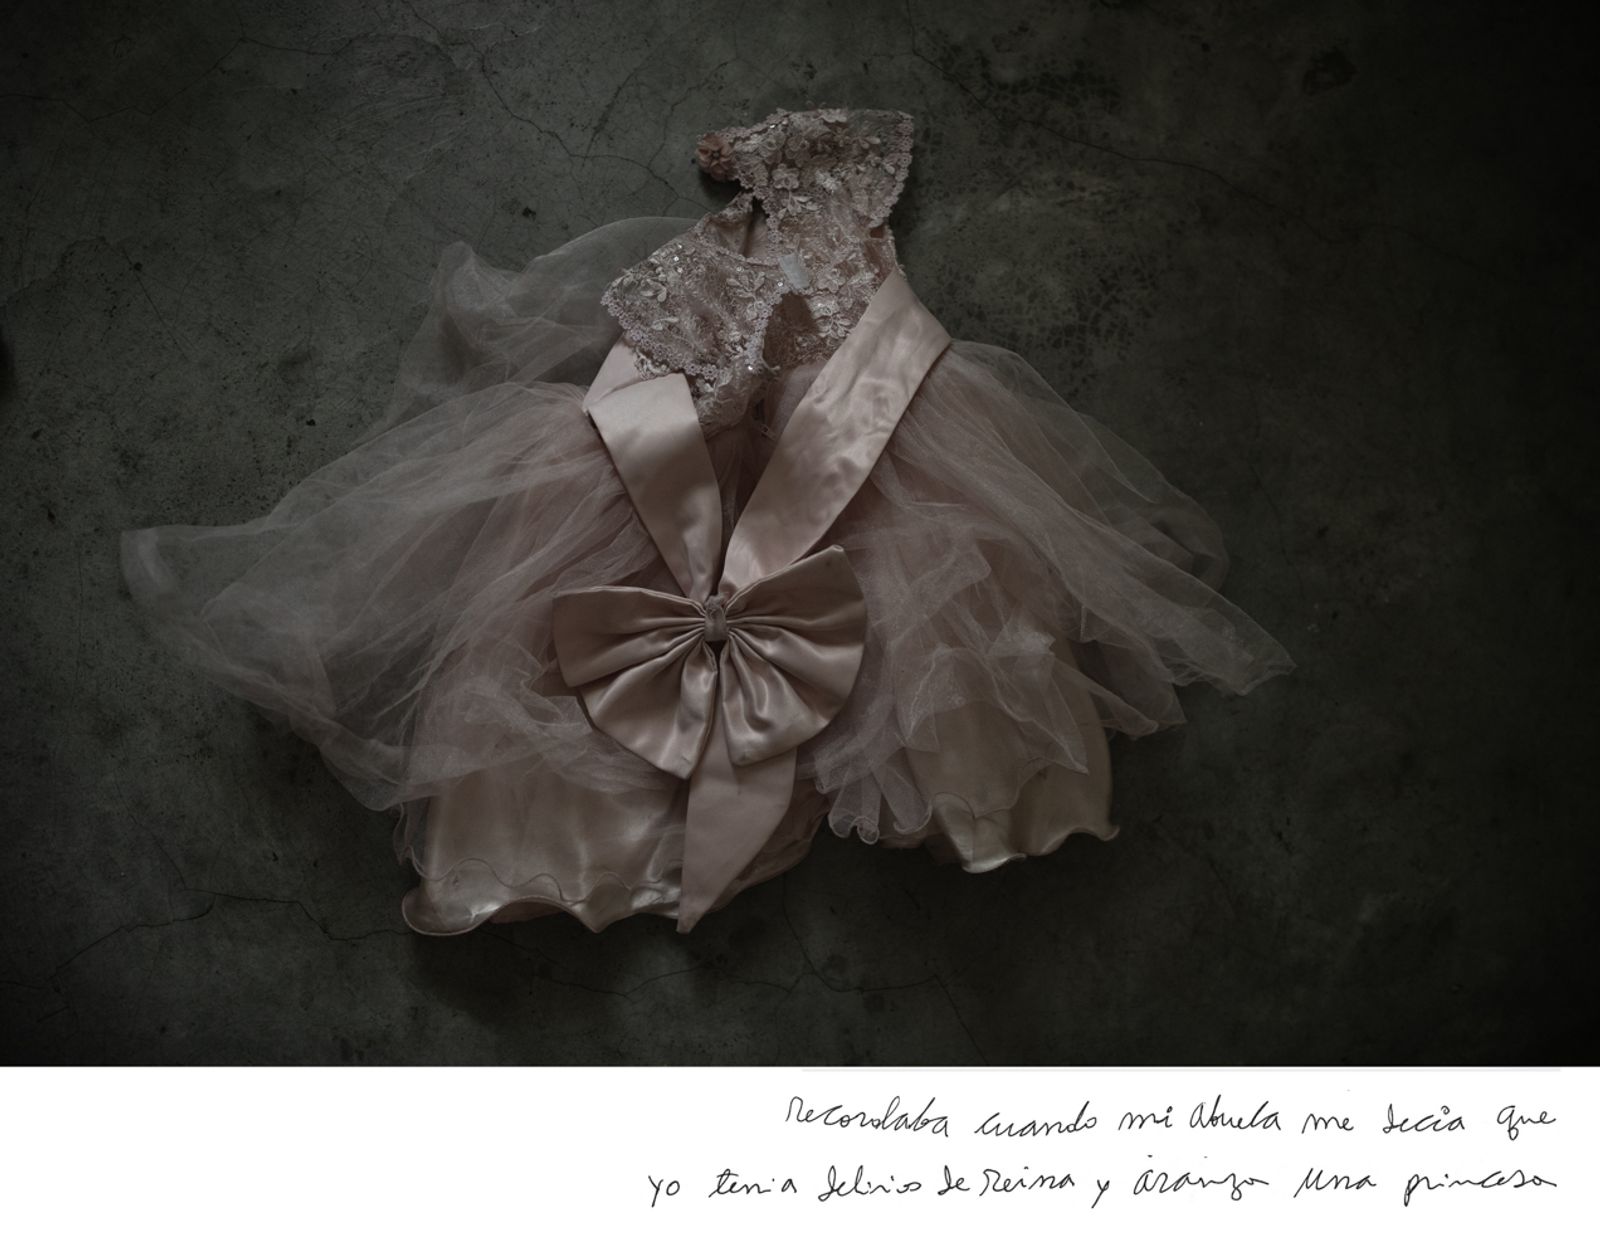 © Daniela Rivera Antara - Image from the Silence of Dawn photography project